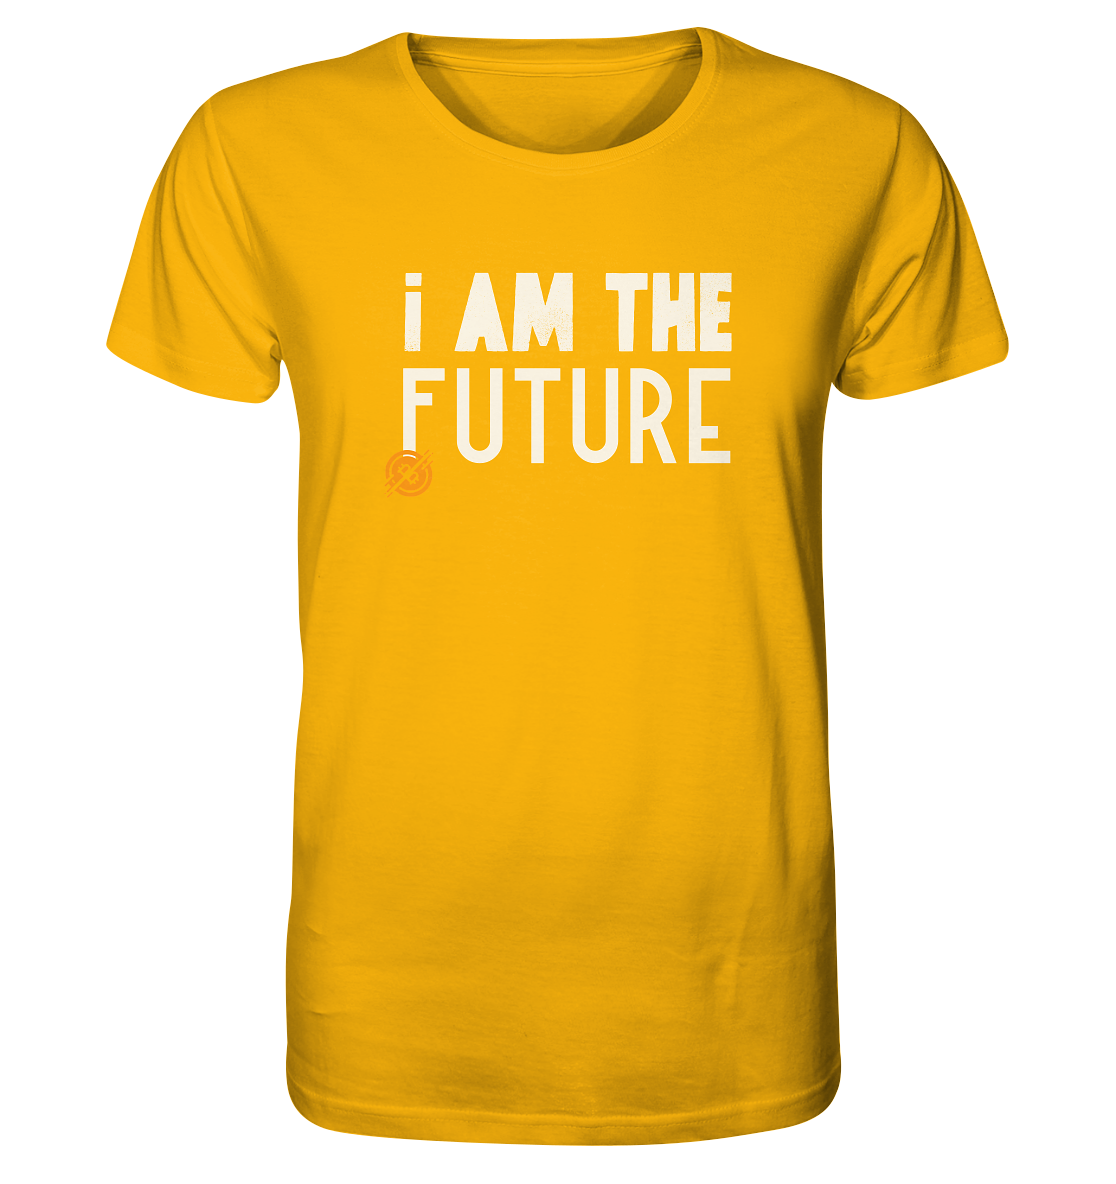 Bitcoin T-Shirt "I am the future" - Organic Shirt